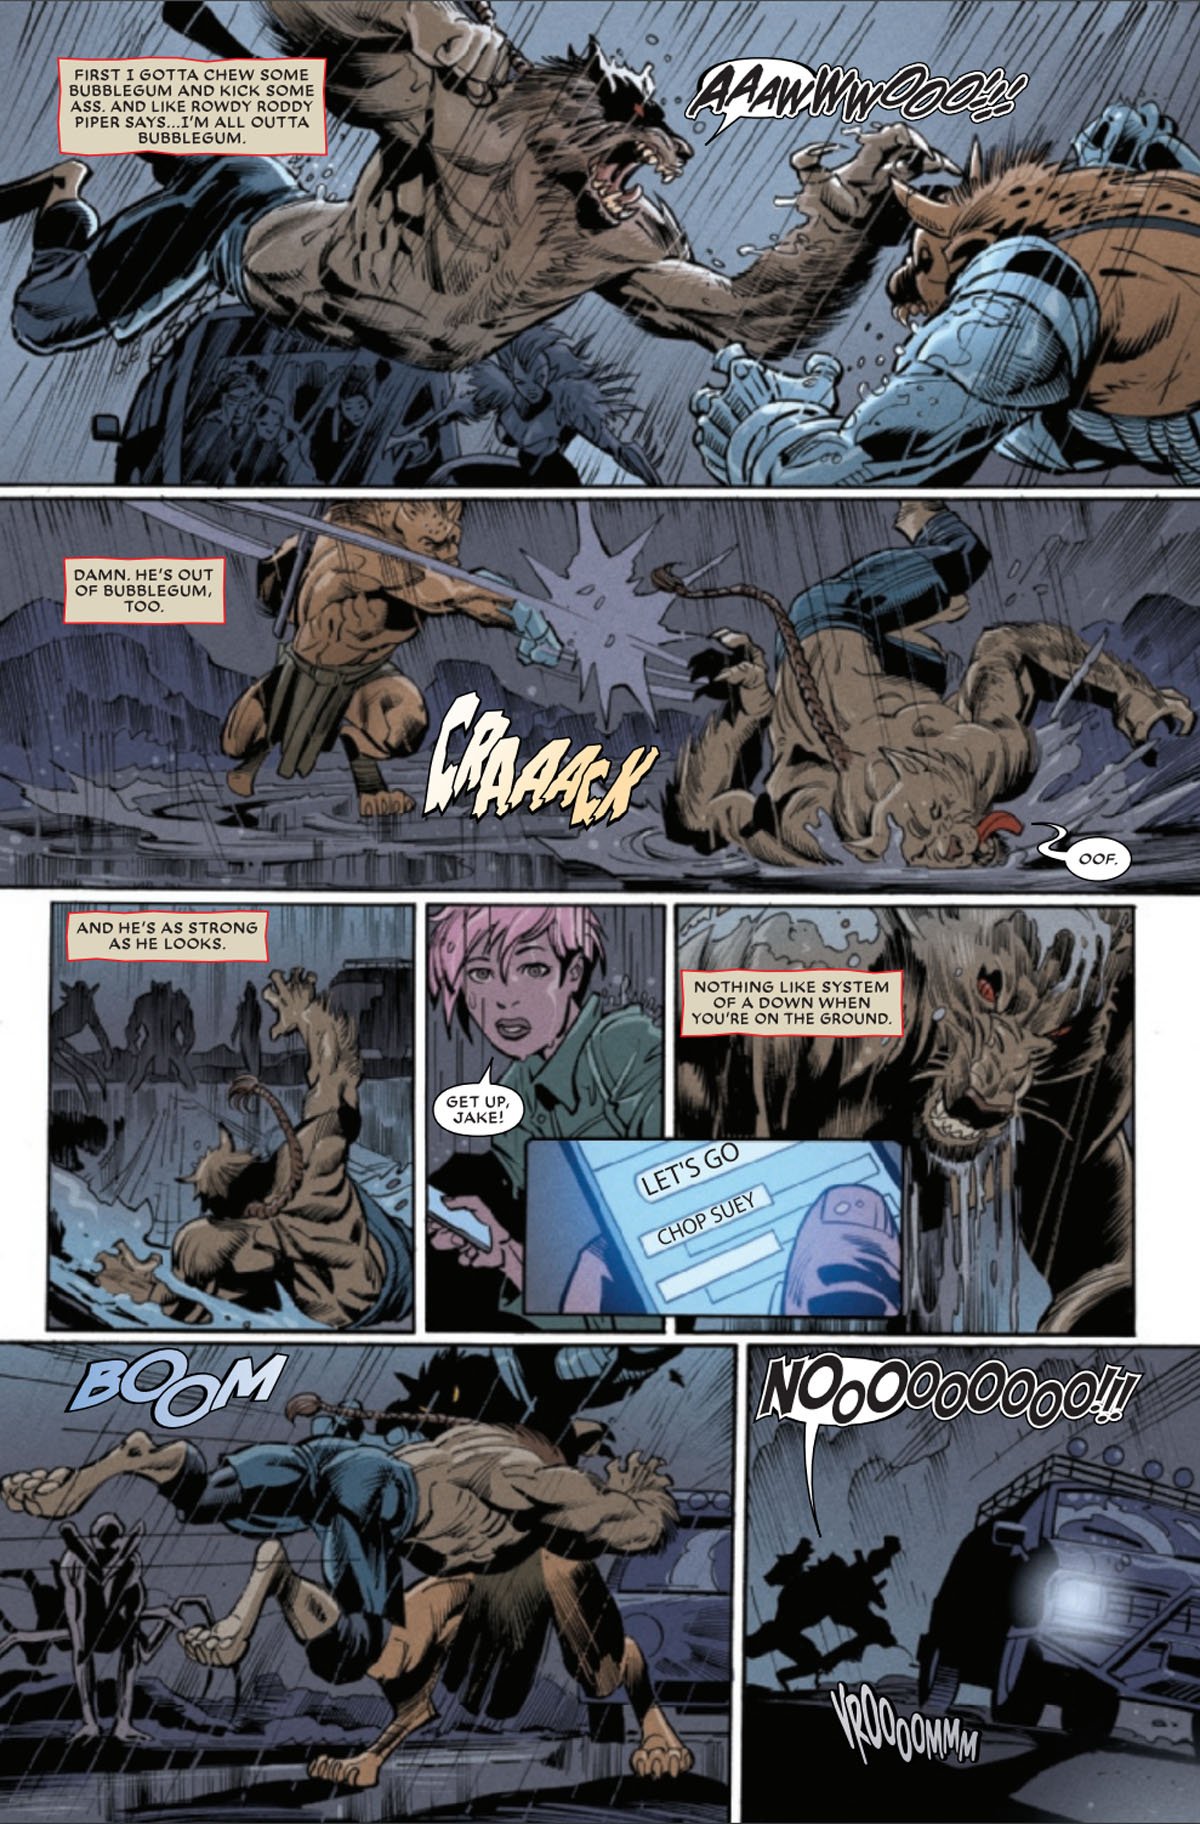 Werewolf by Night #2 page 2